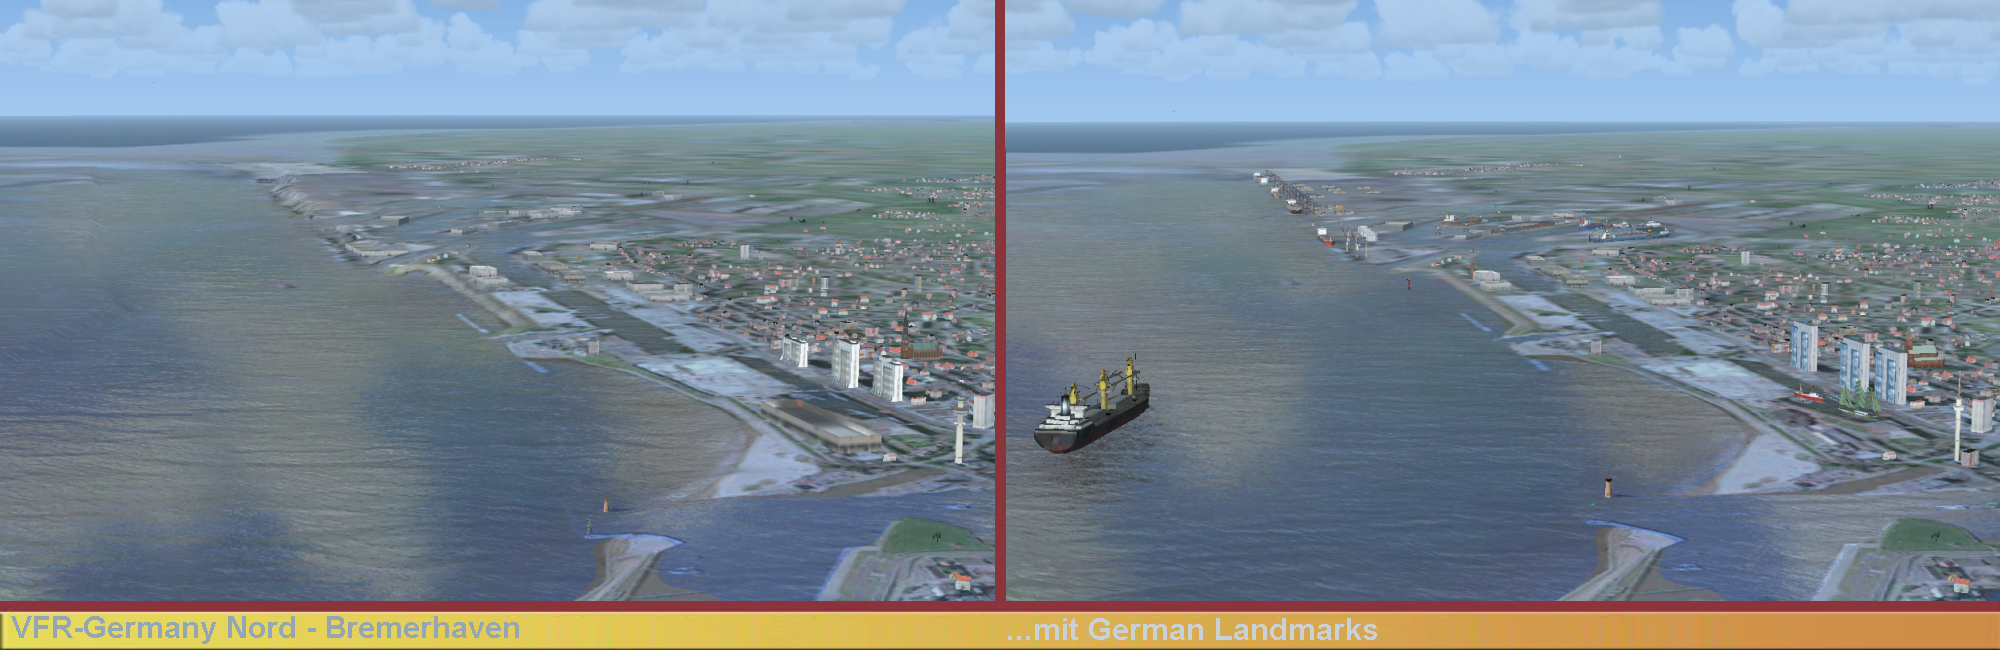 German_Landmarks-VFR-Germany_04.jpg